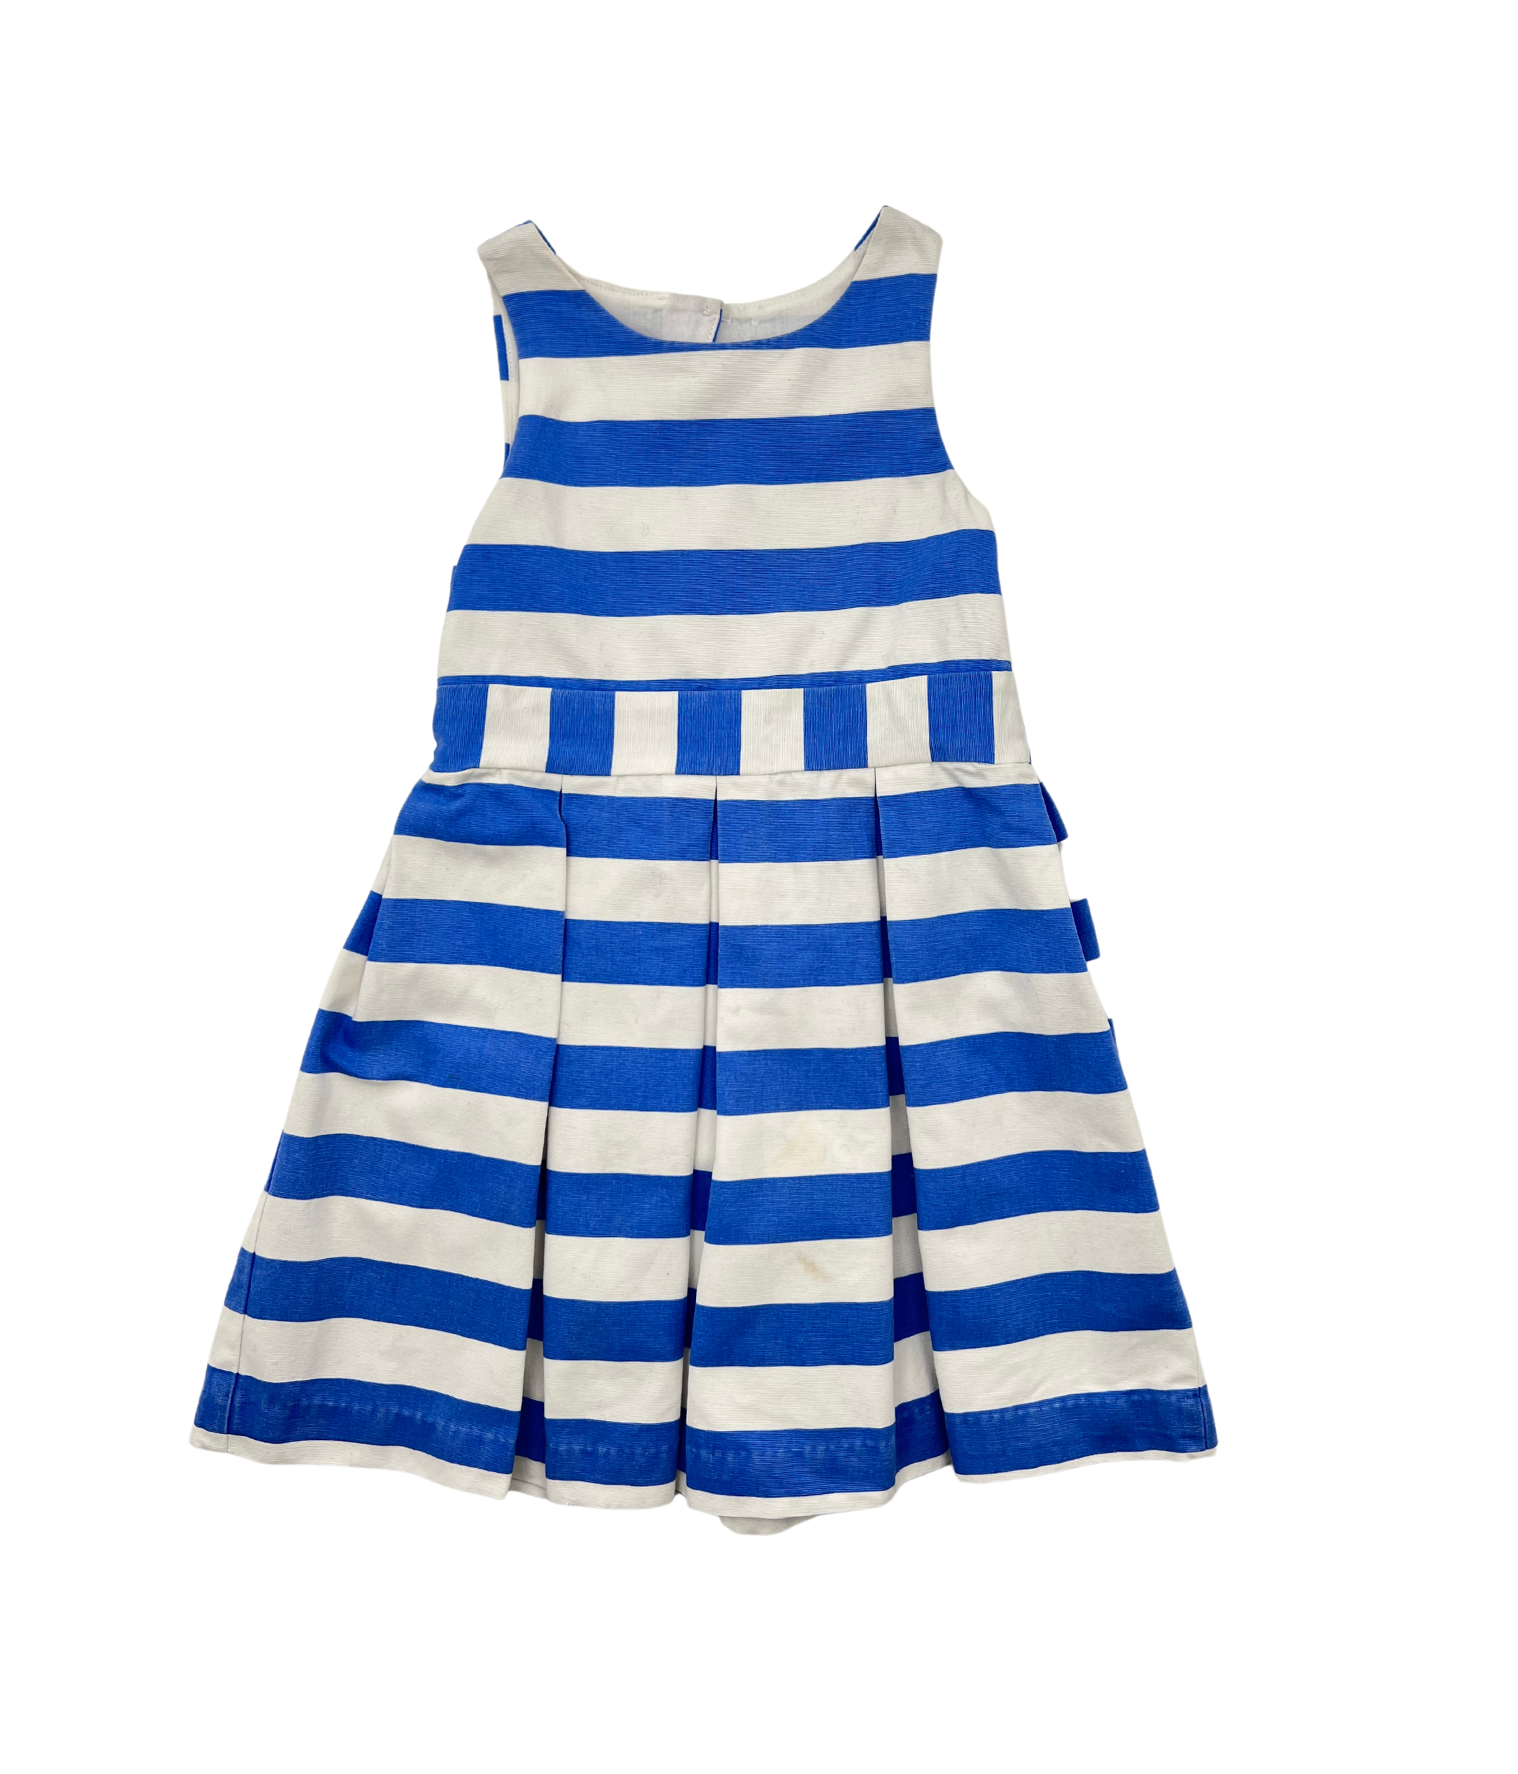 JACADI - Striped dress - 6 years old